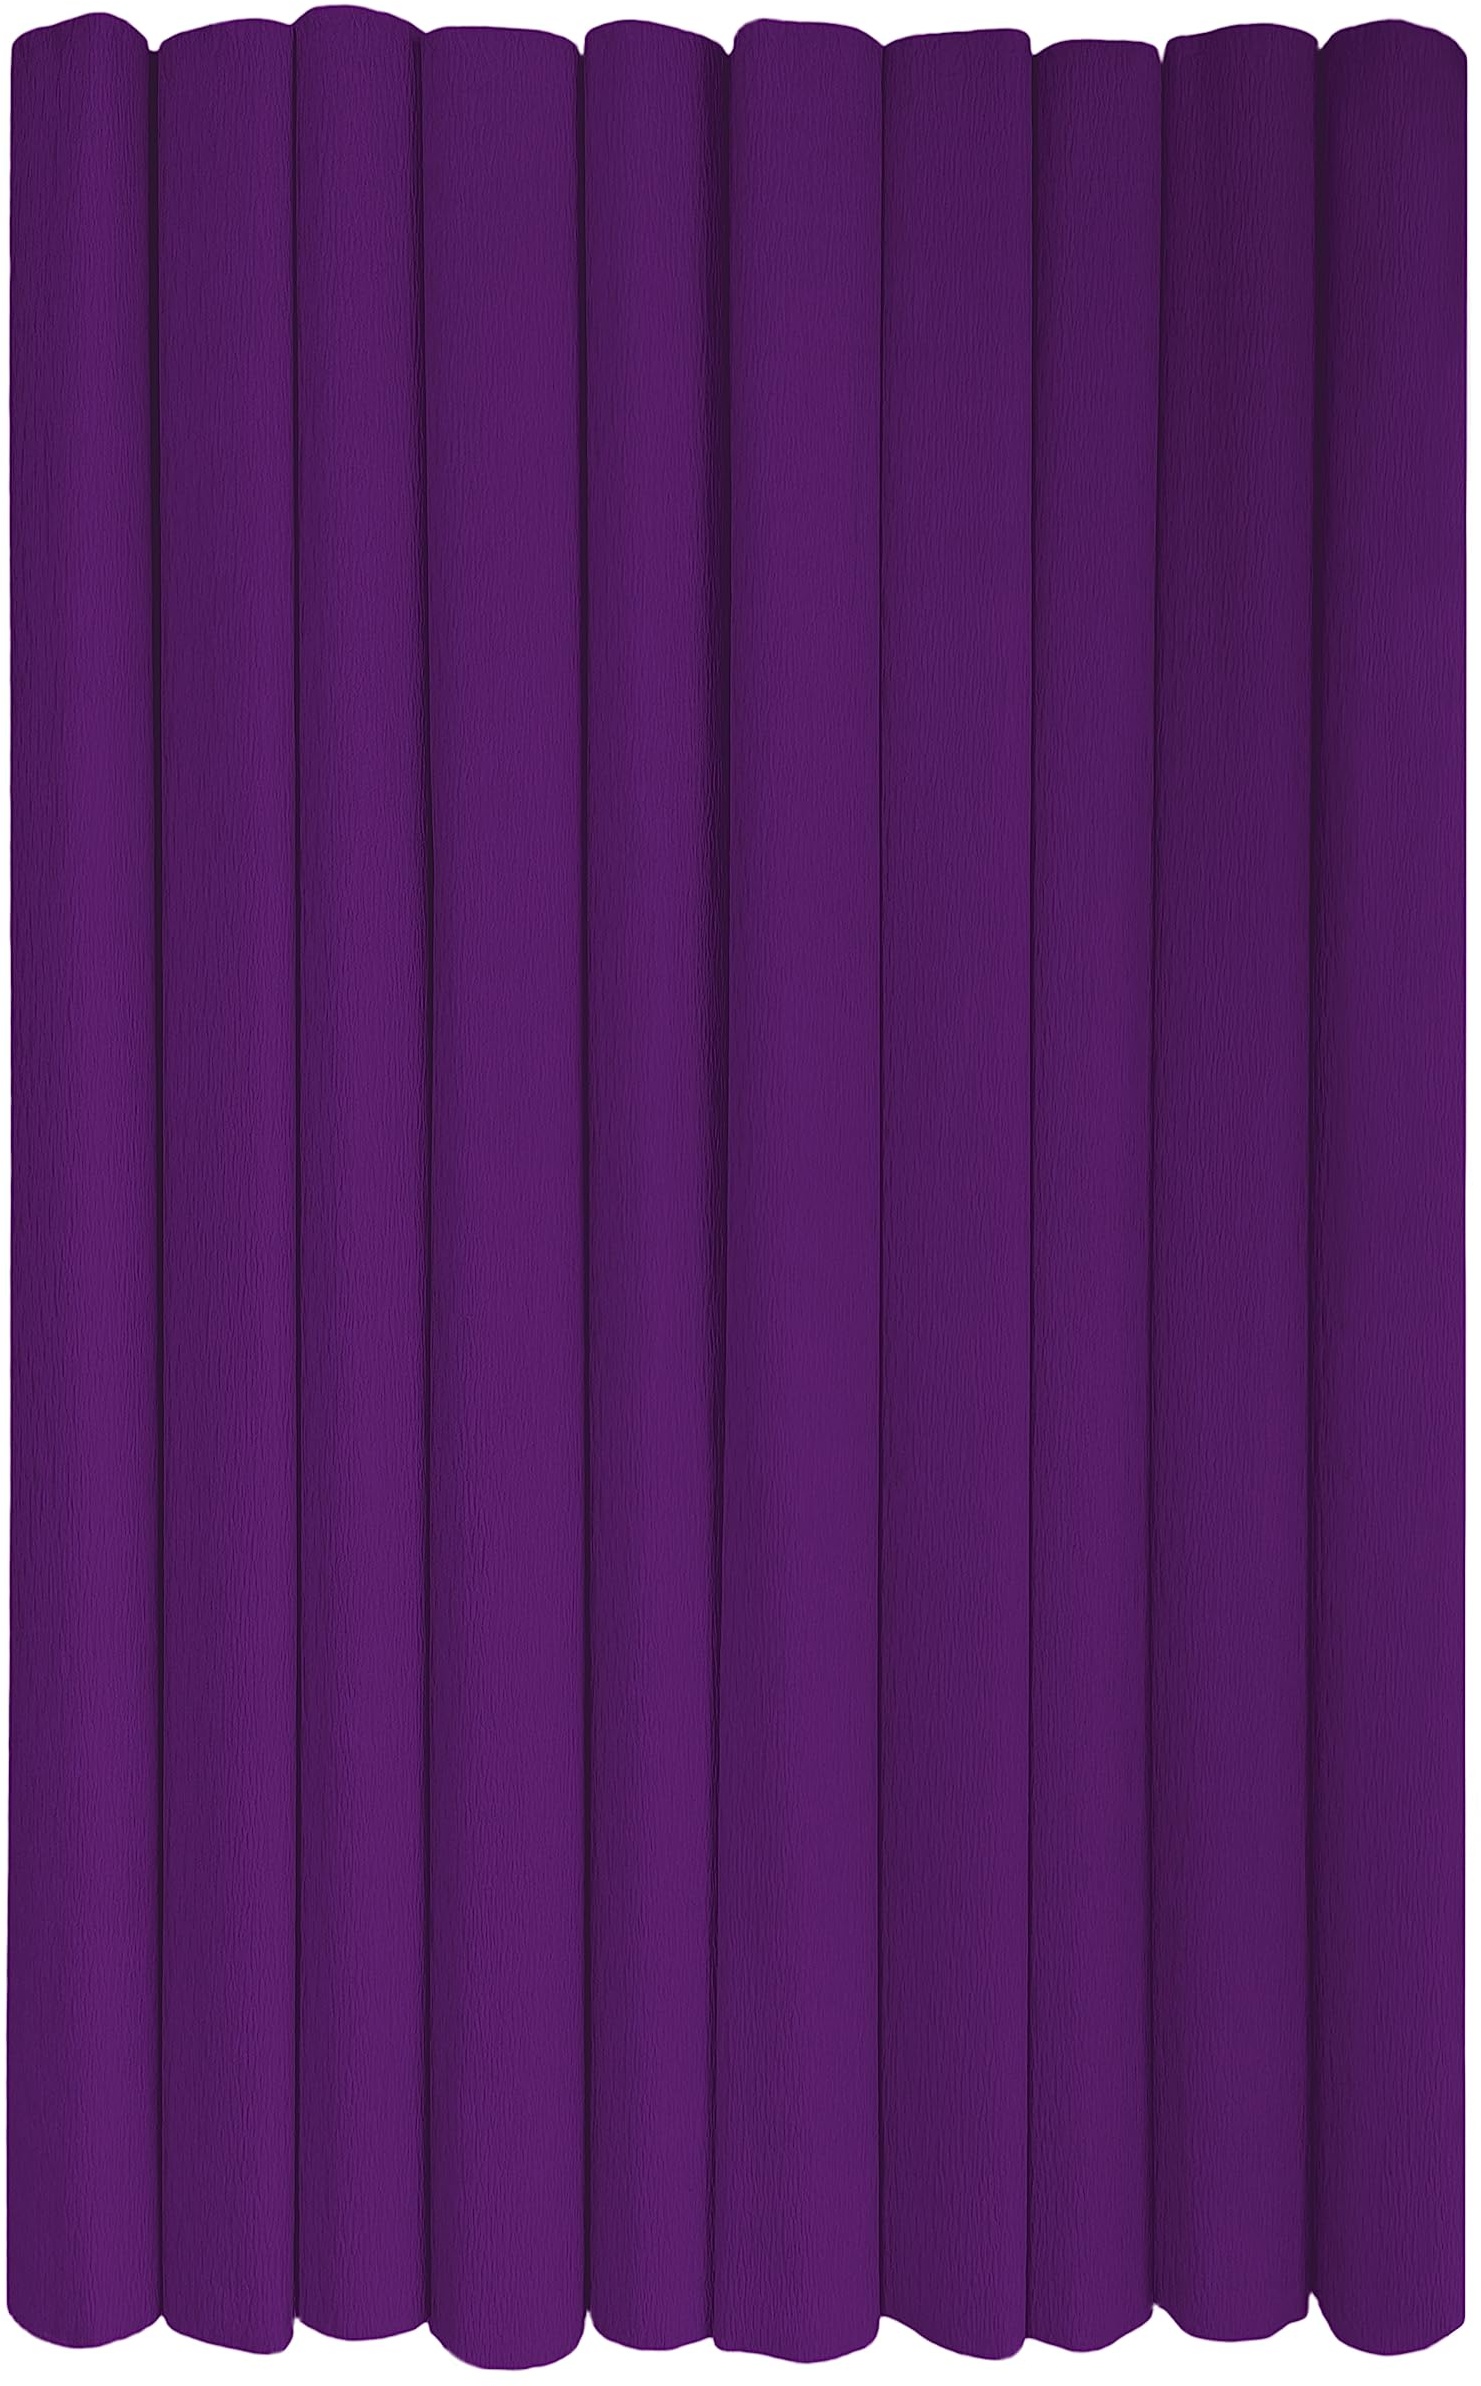 Interdruk - Crepe Paper Rolls for Kids, DIY and Decorations - Pack of 10 Reels (50cm x 200cm, 28g/m2) - 13 Purple